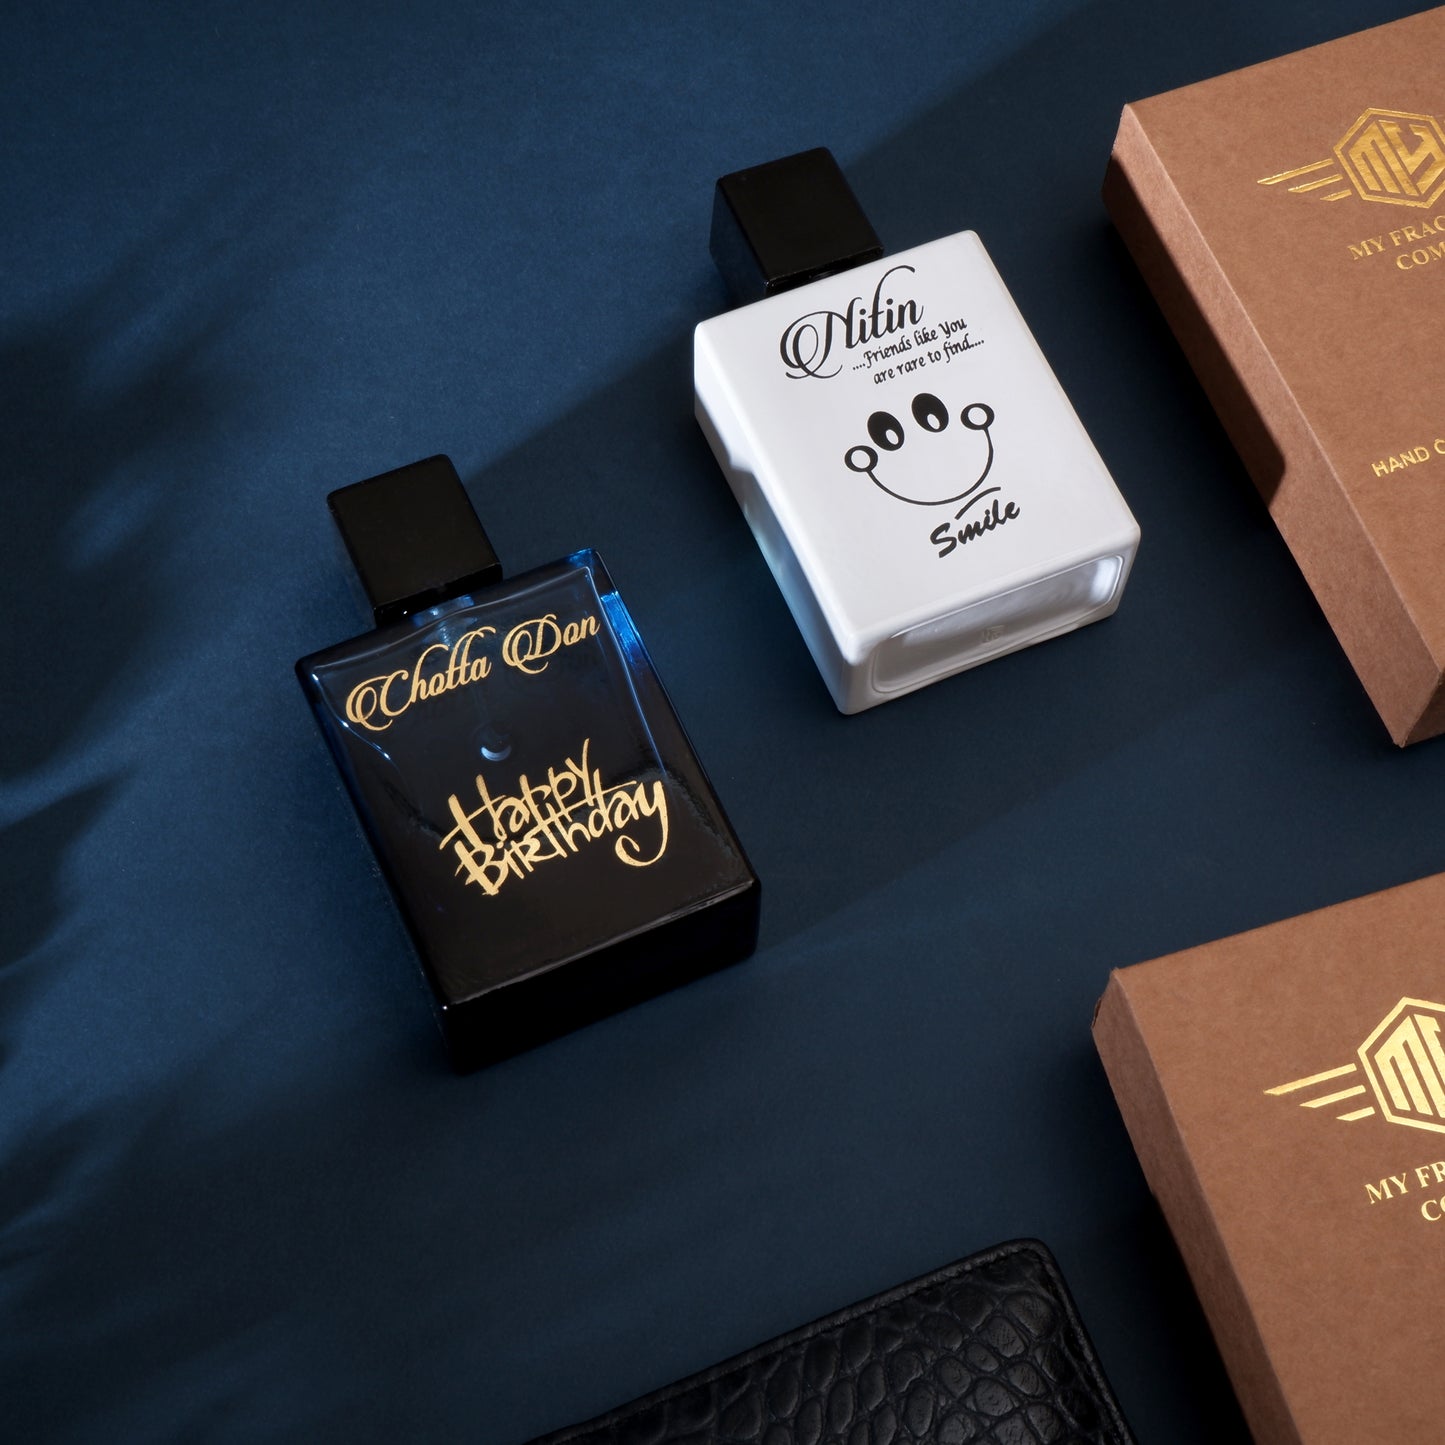 Luxury Customised Handcrafted Perfume 100 Ml - Best Friend Forever | Unisex Perfume